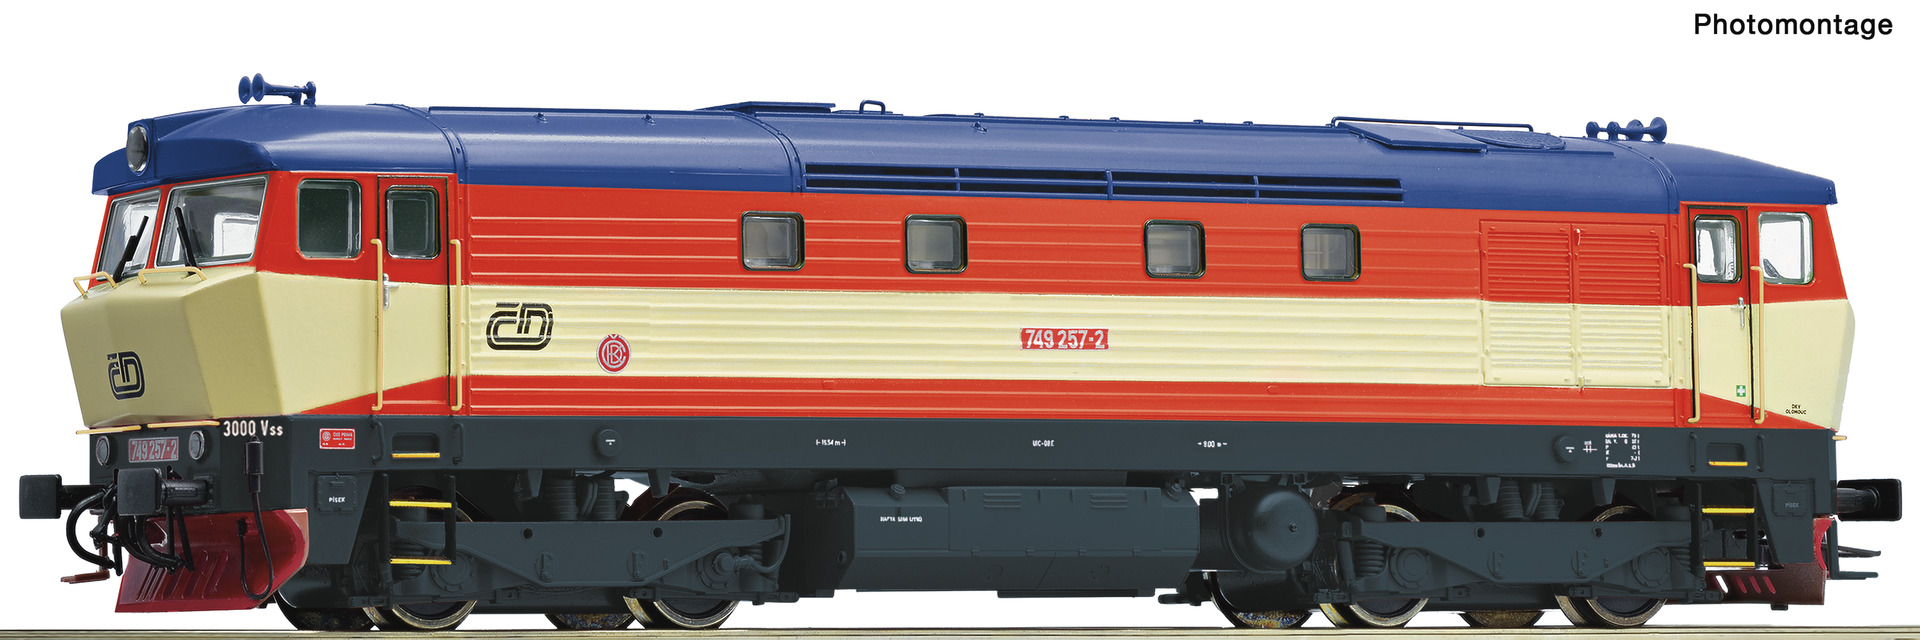 Roco 7310008  Diesel locomotive 749 257-2, CD (DCC/Sound)